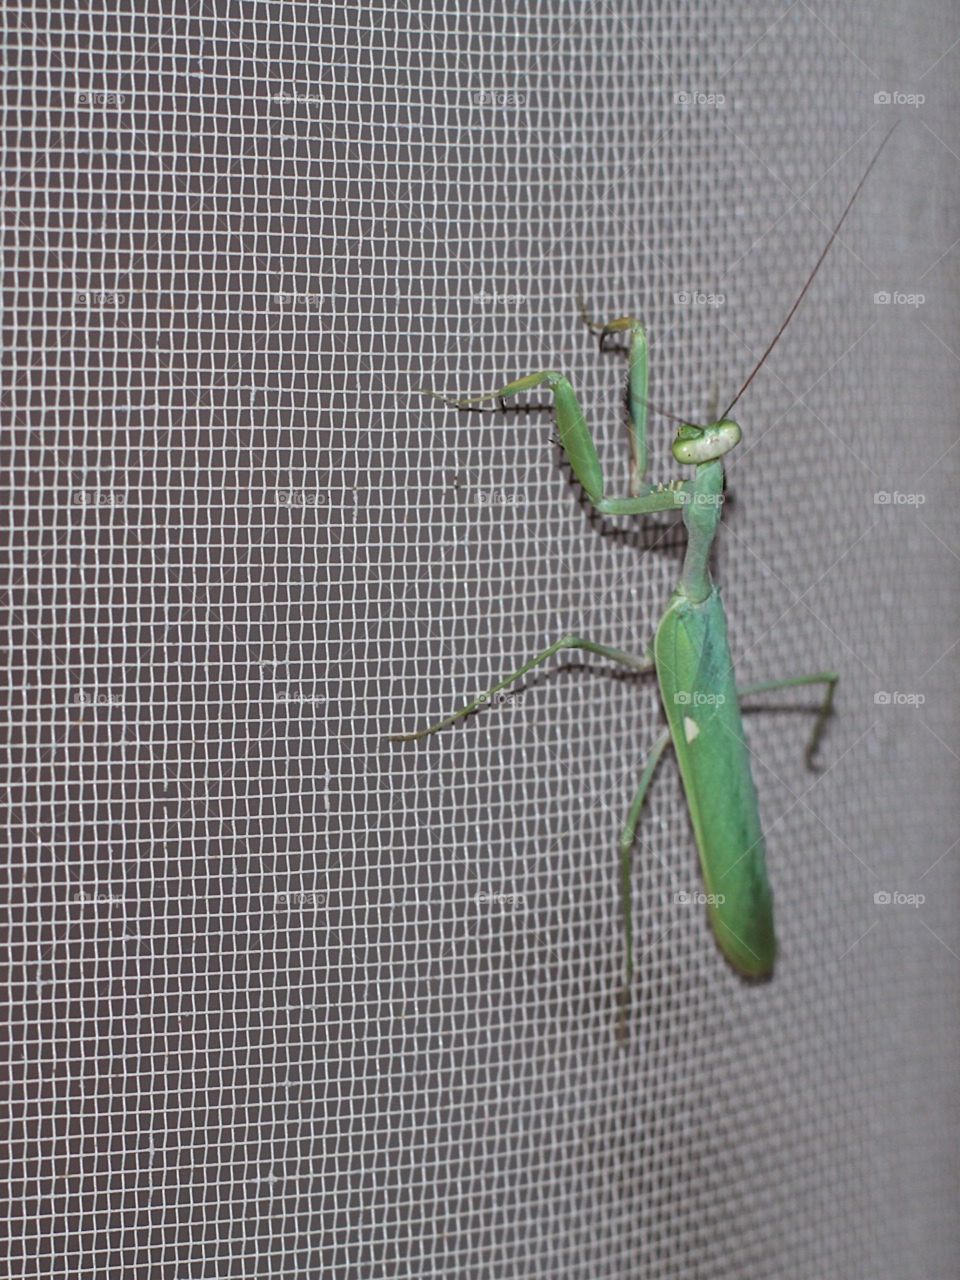 grasshopper in mosquito net